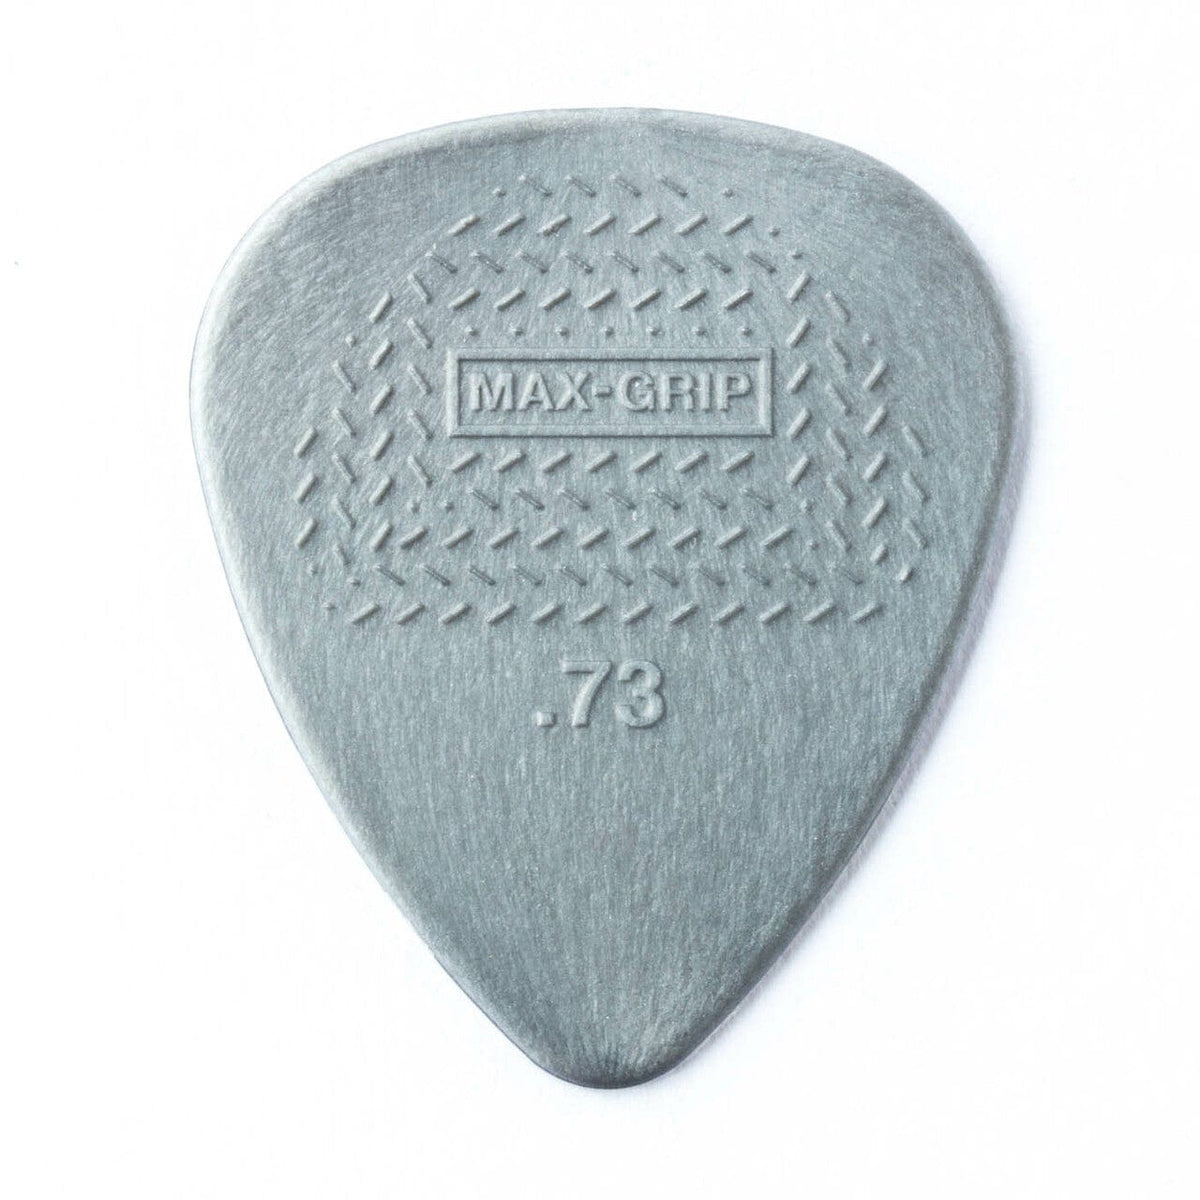 Dunlop Max Grip .73 Guitars on Main